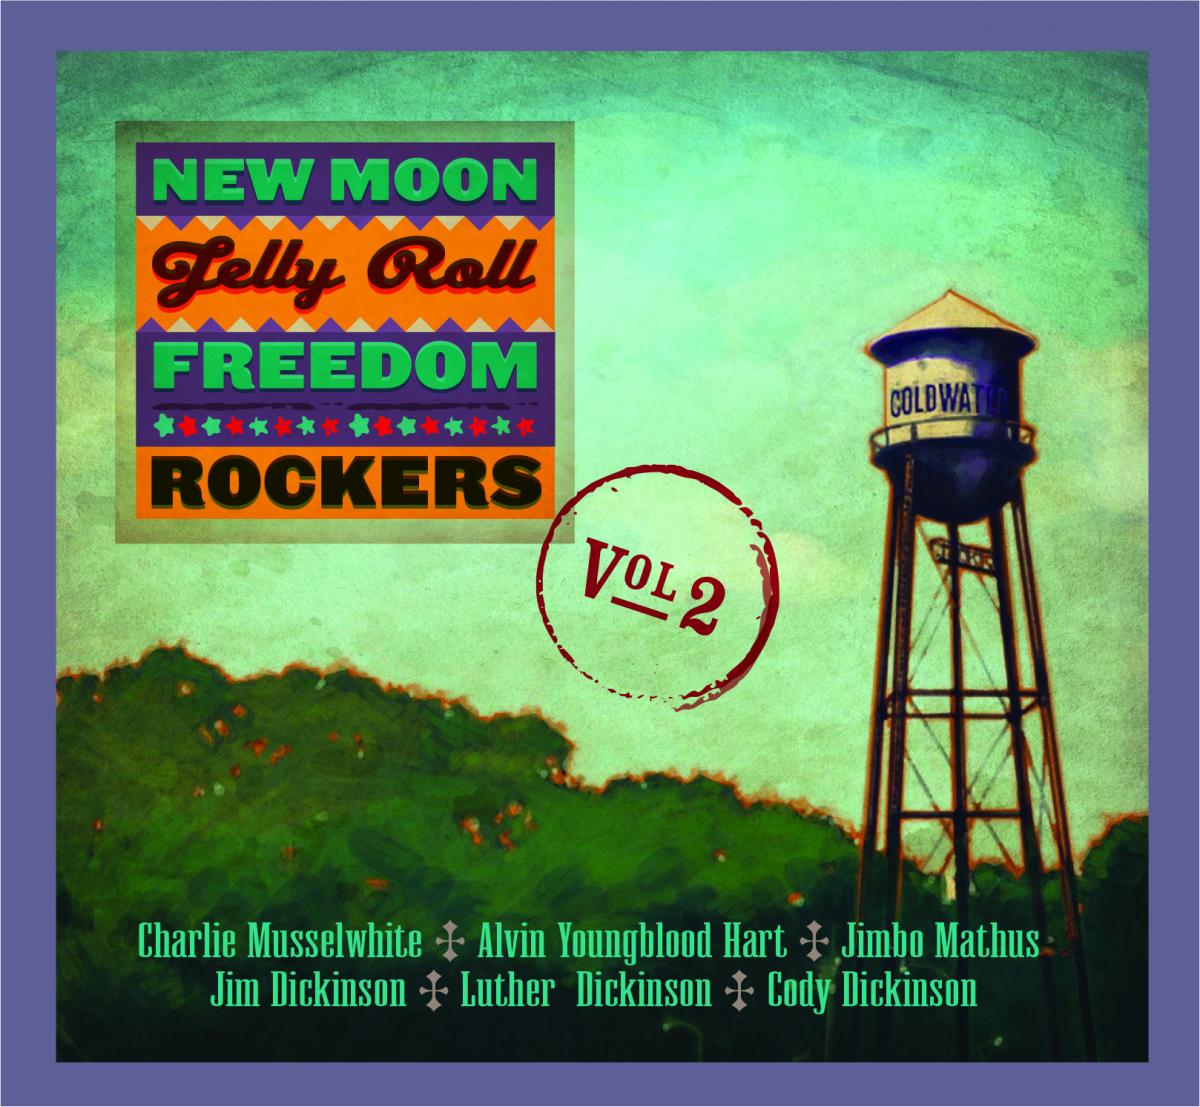 New Moon Jelly Roll Freedom Rockers Release Vol 2 on Stony Plain